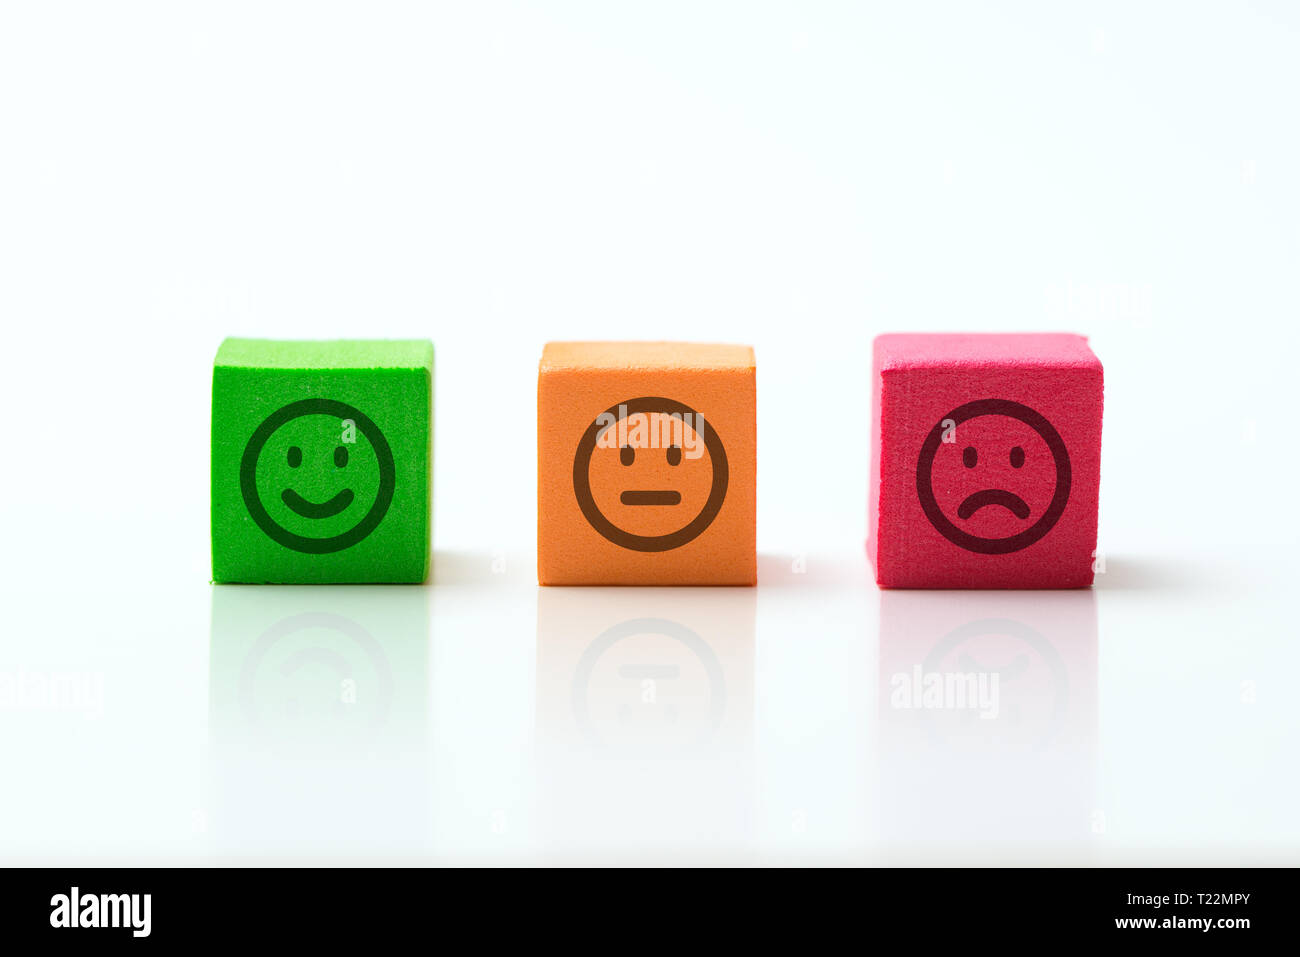 Drei emoticons icons Positiv, Neutral und Negativ Stockfoto